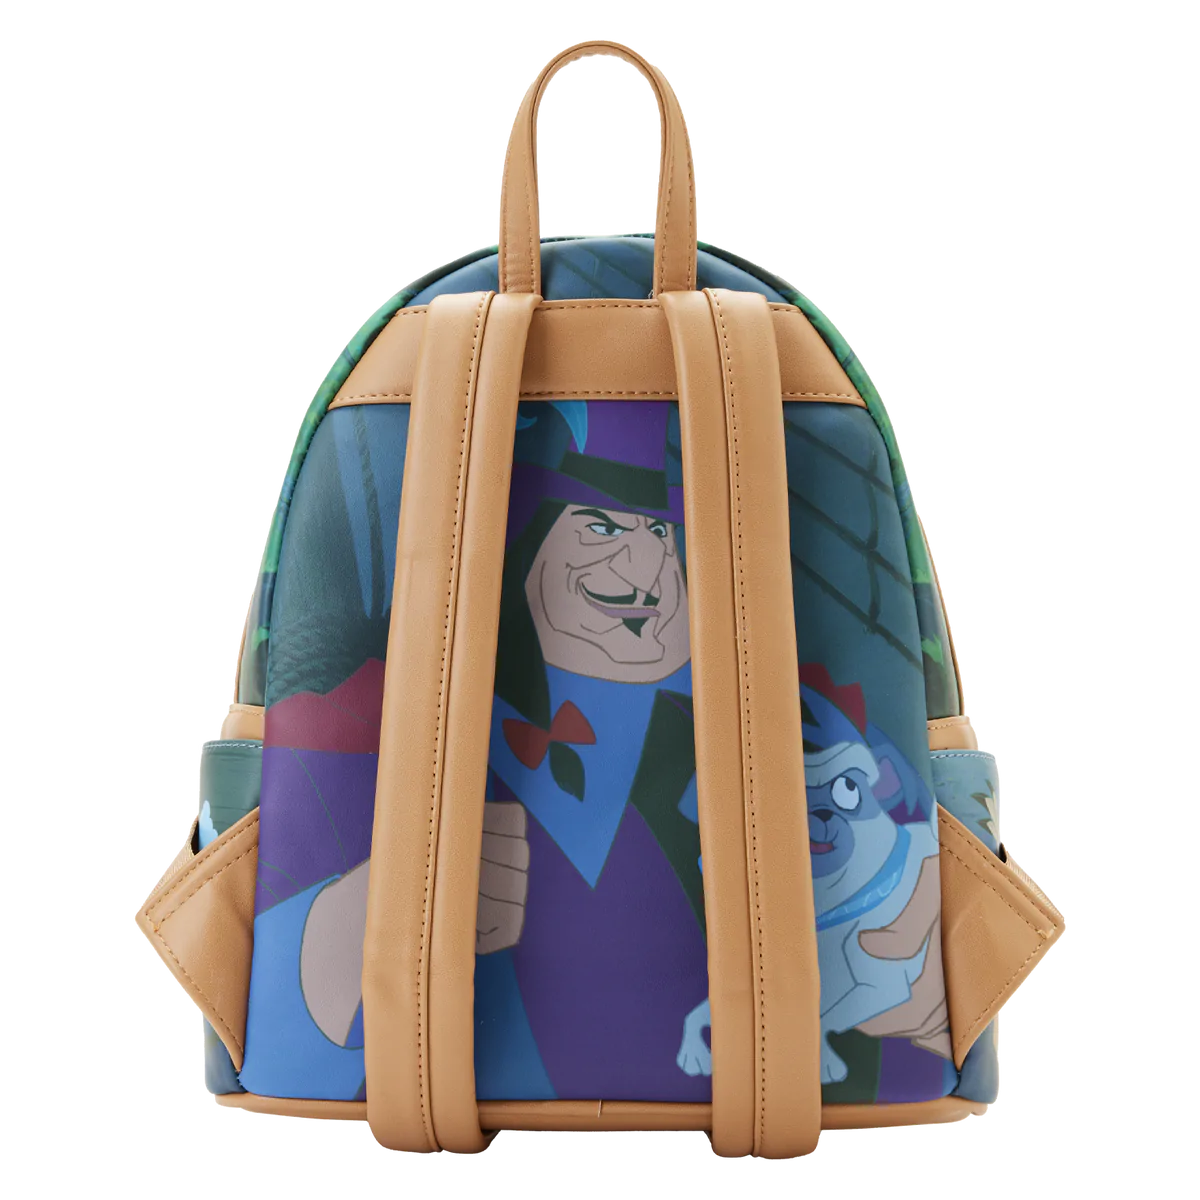 Loungefly Rapunzel Princess Scene Mini Backpack